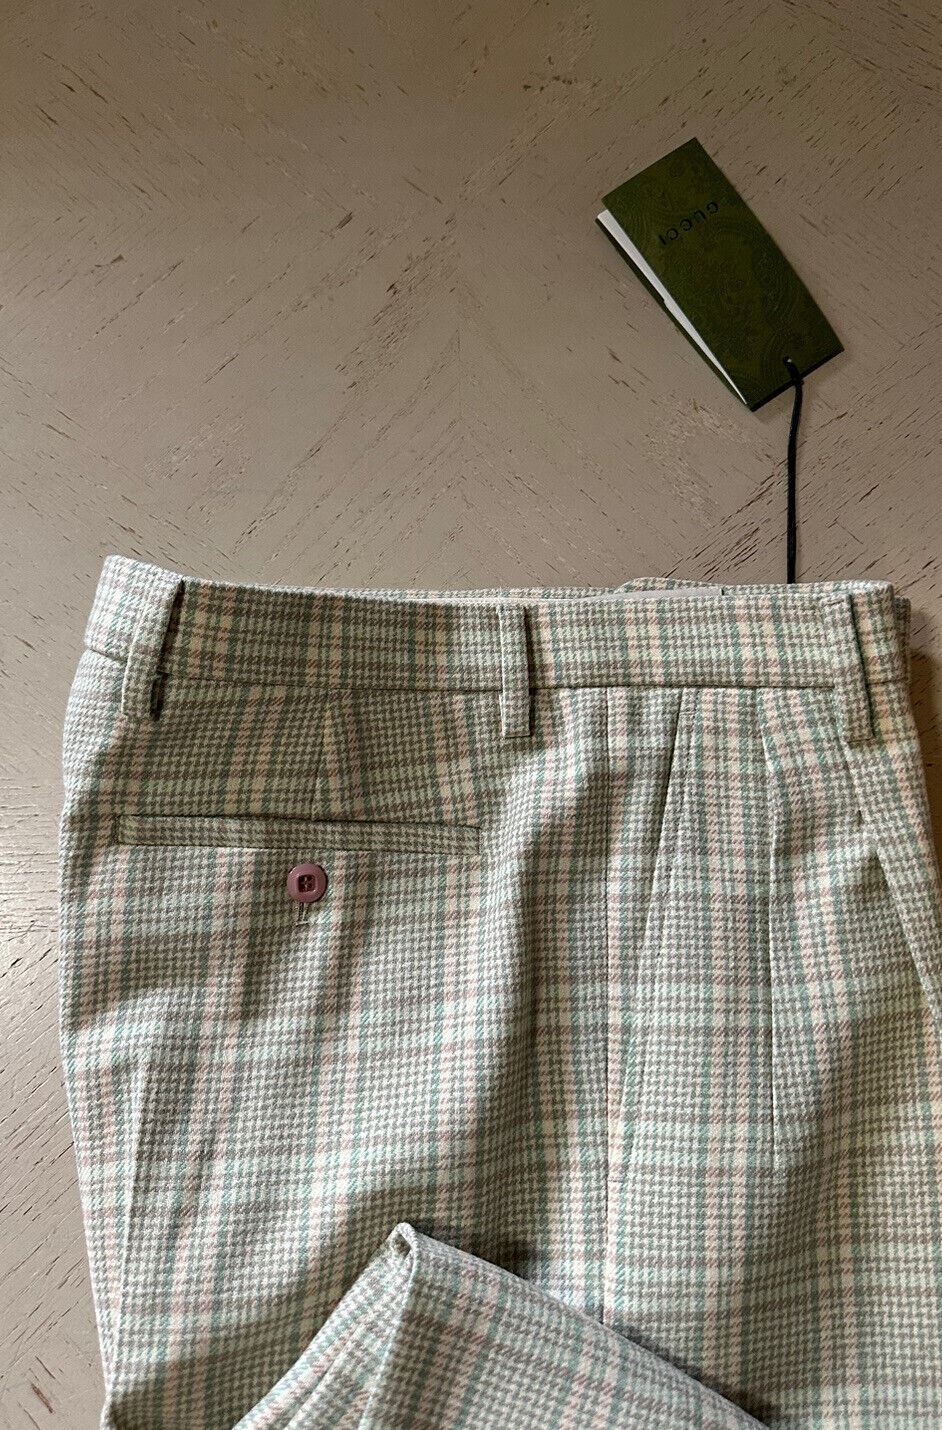 СЗТ $1400 Мужские классические брюки Gucci зеленый/бежевый 34 США (50 ЕС) Италия